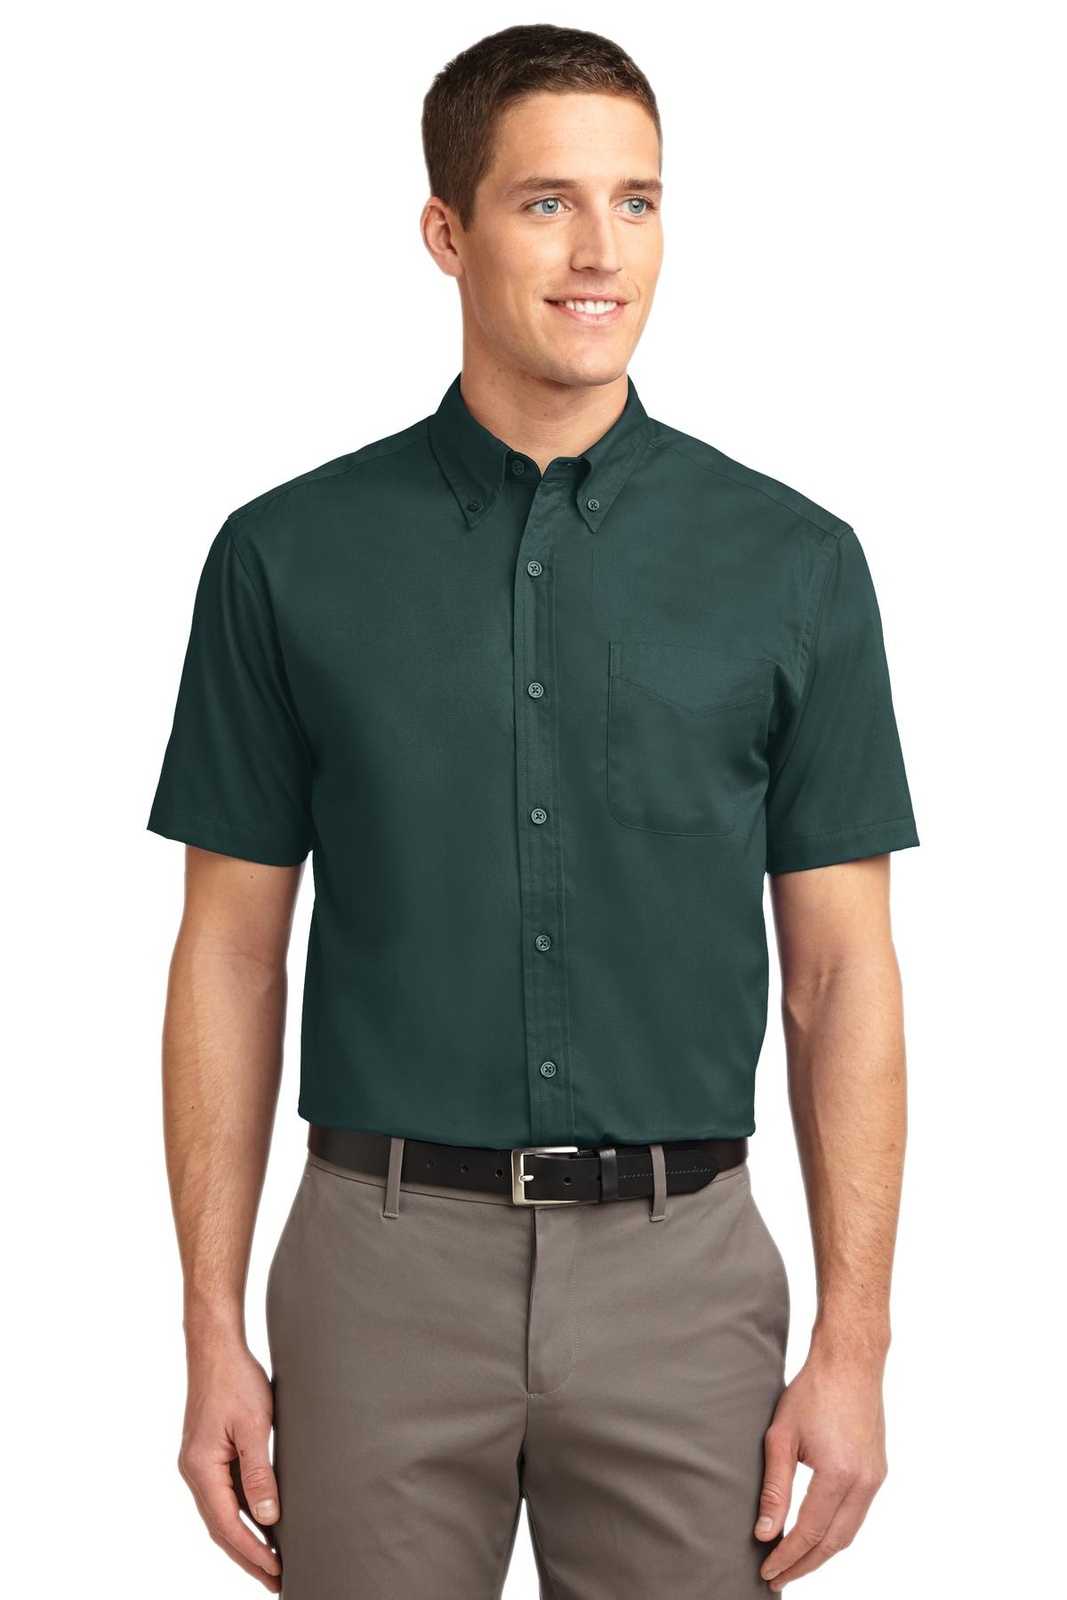 Port Authority TLS508 Tall Short Sleeve Easy Care Shirt - Dark Green Navy - HIT a Double - 1